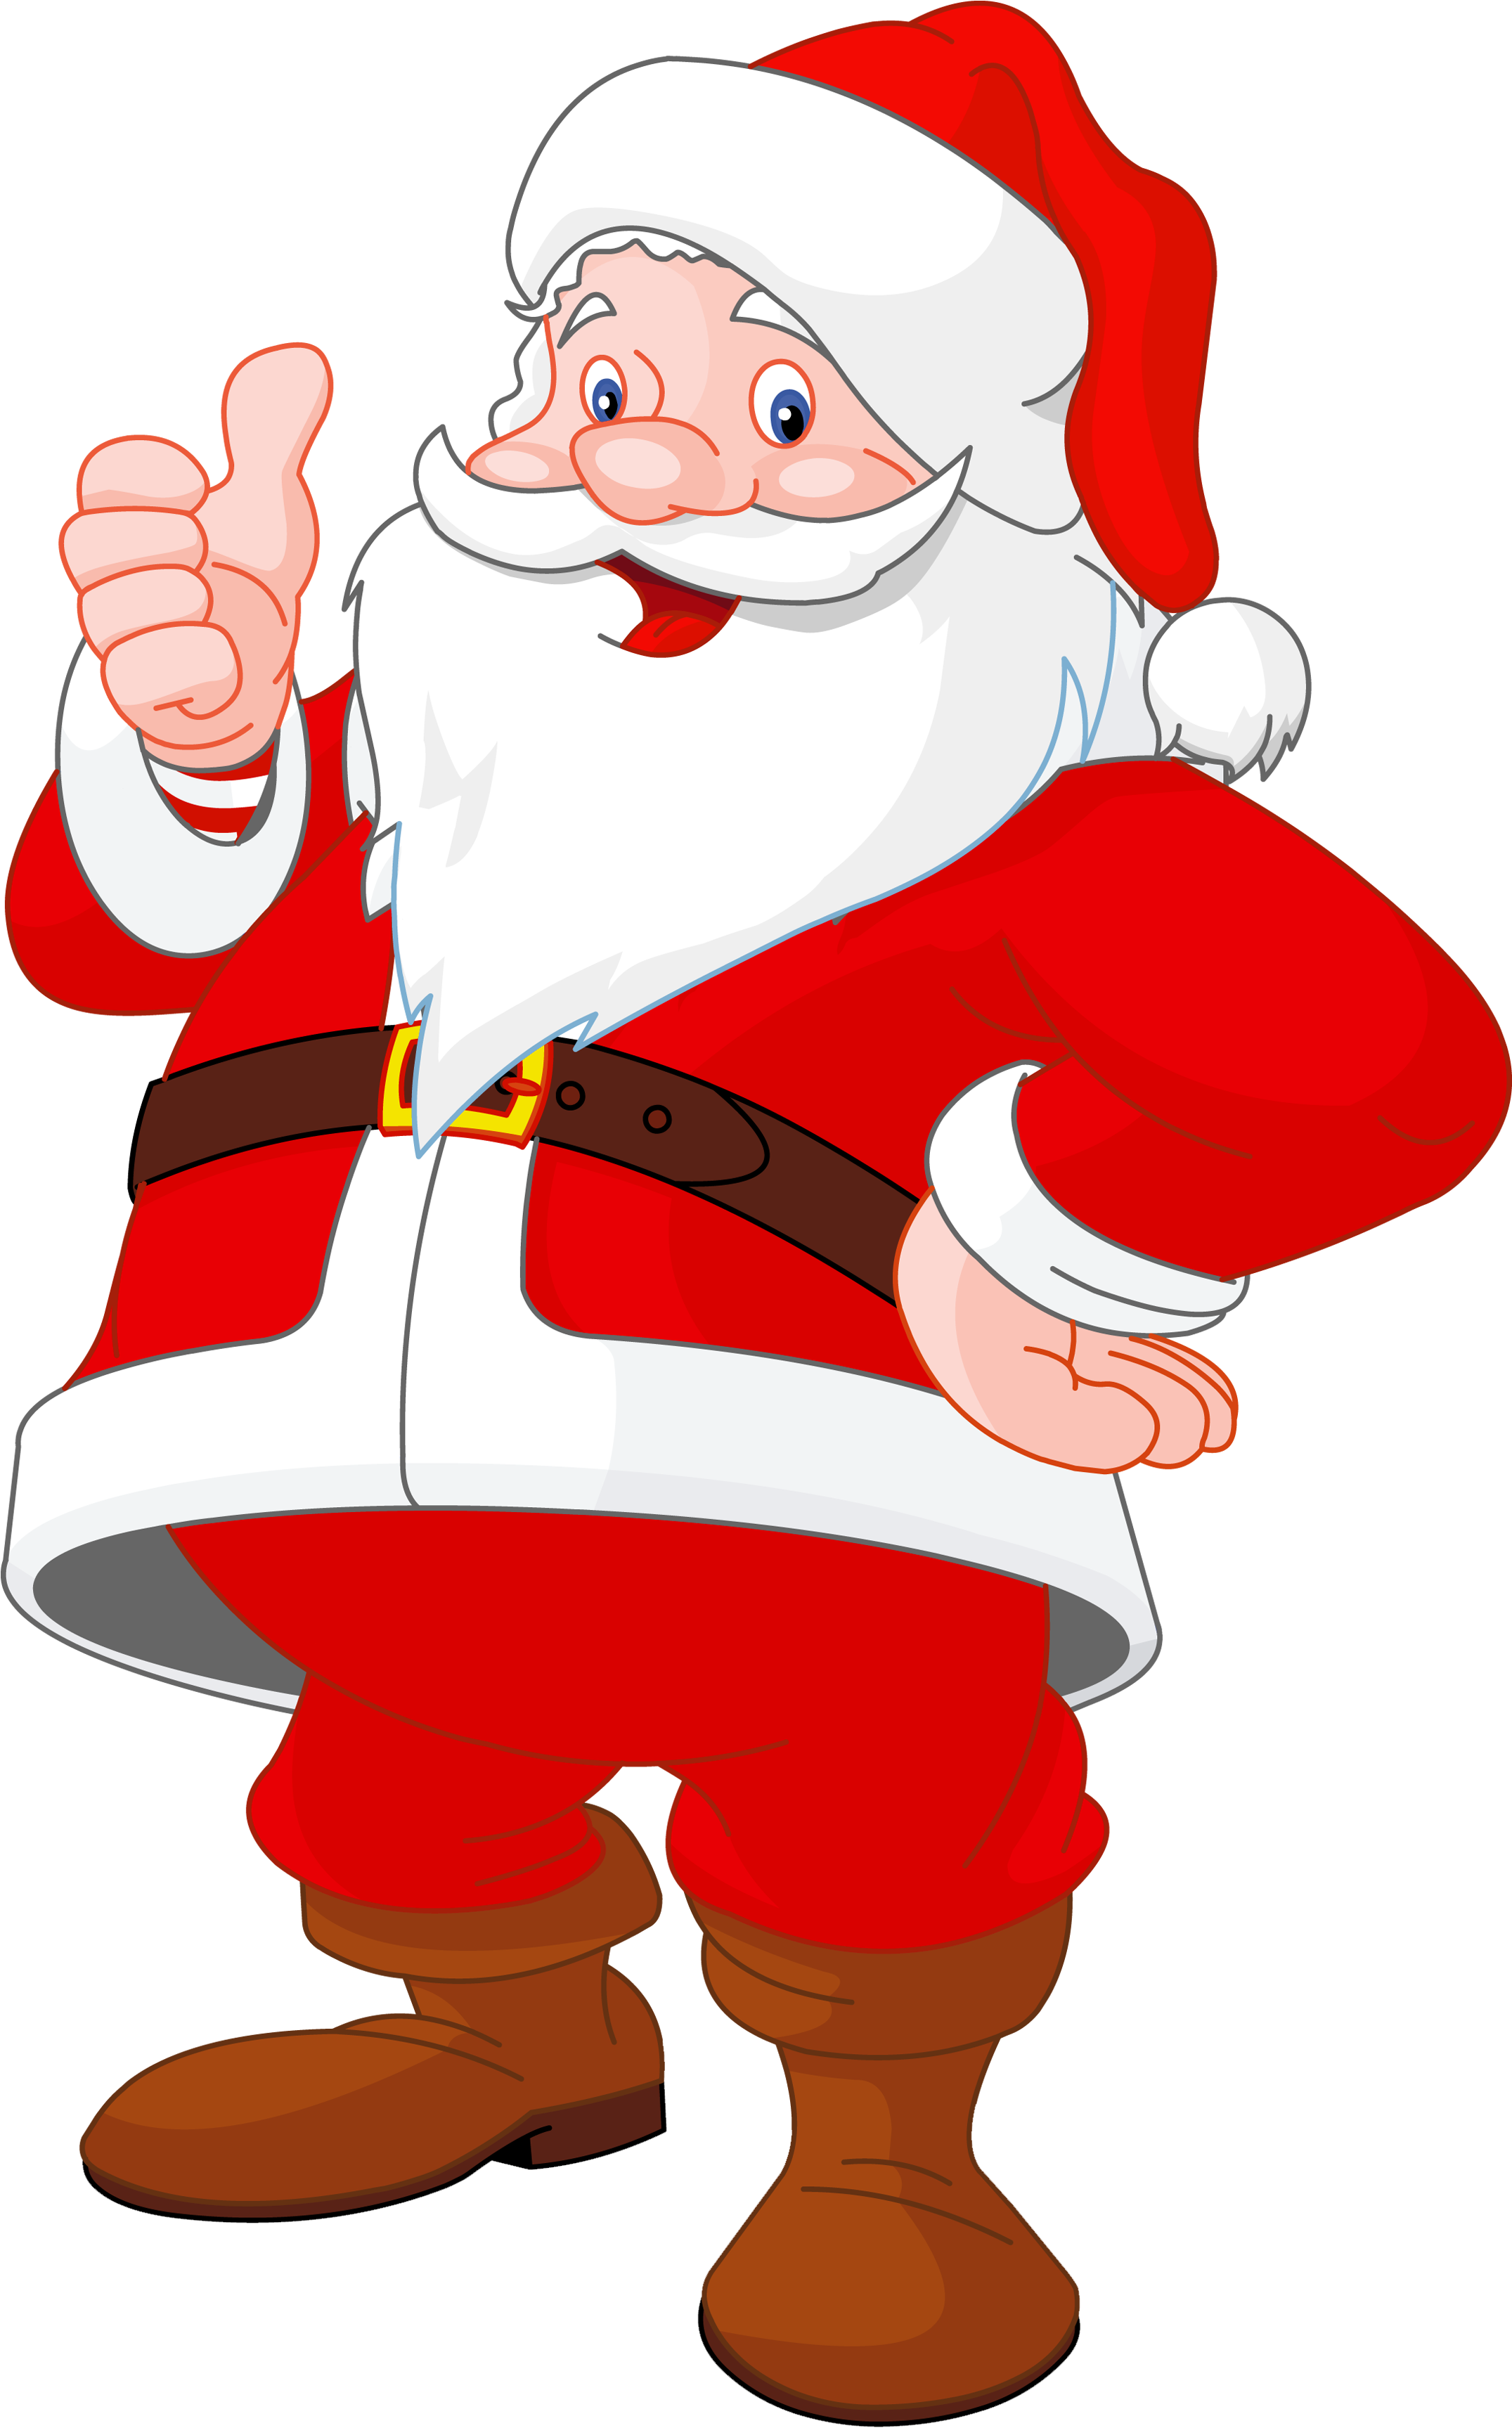 Santa, Presents, Food, Gluhwein And The Chance To Shop - Santa Claus Clip Art (2150x3472)